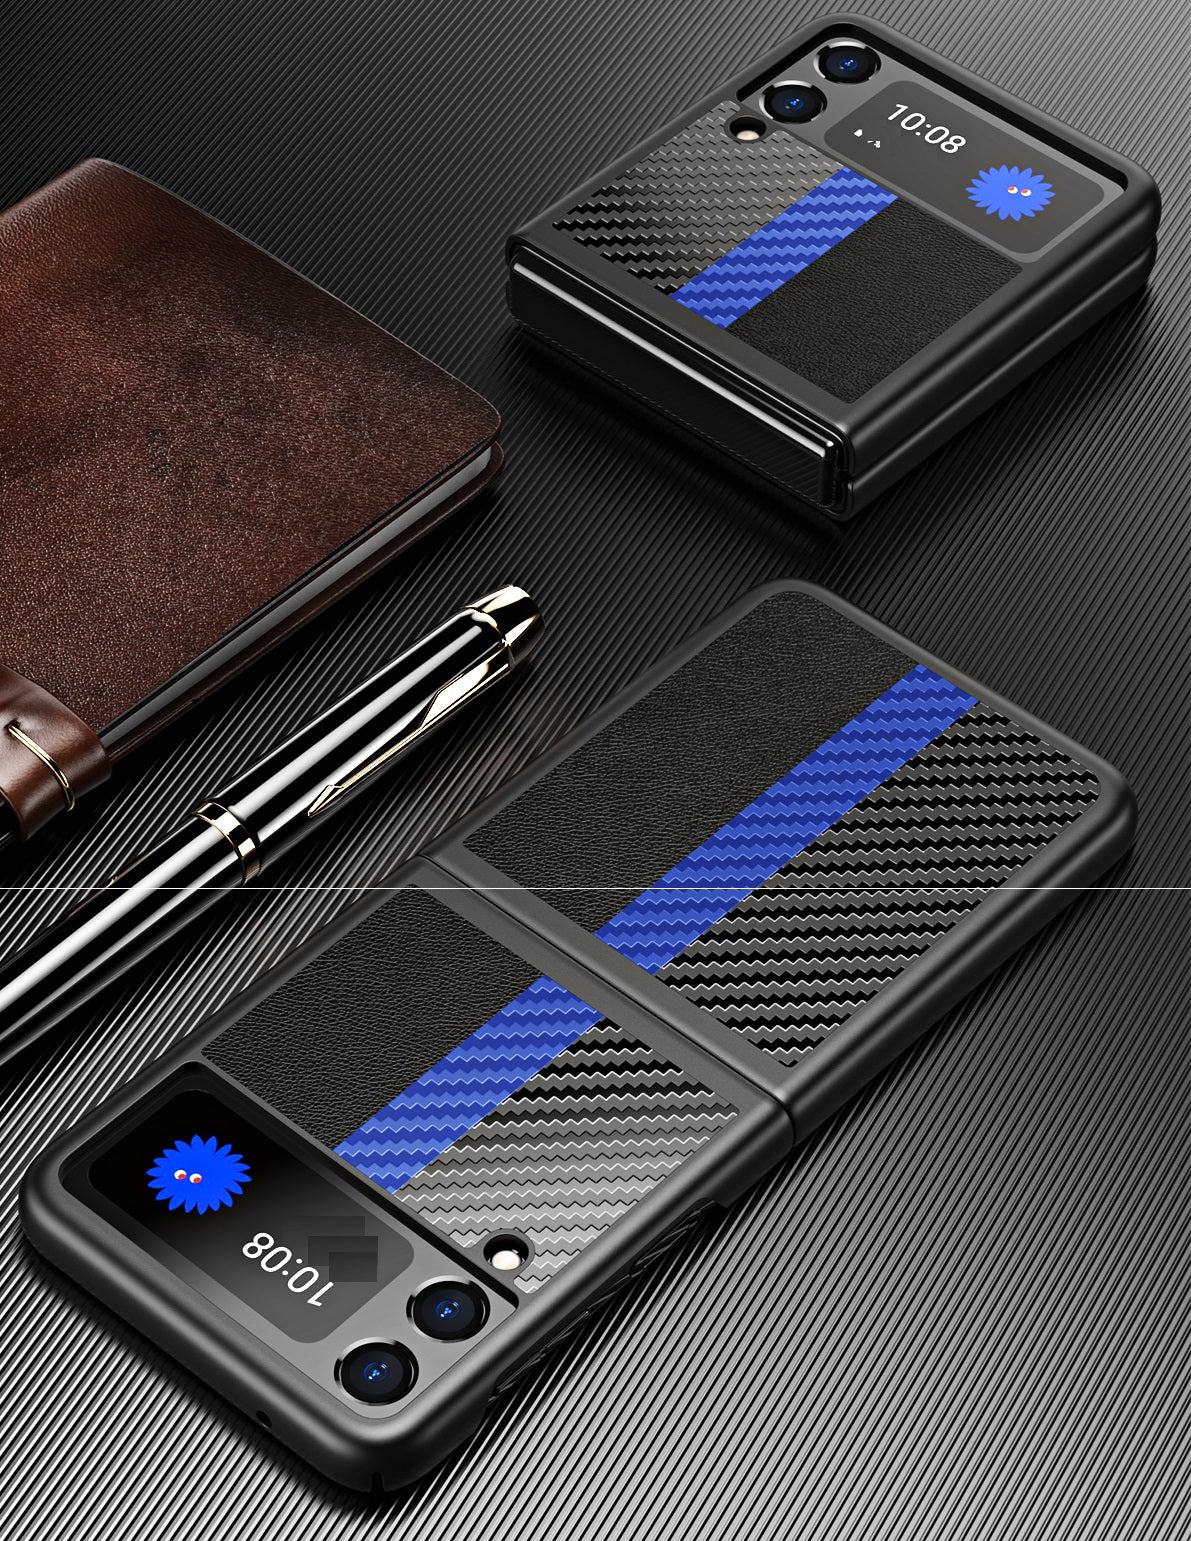 Samsung Galaxy Z flip 3 Case : Blue Line Leather